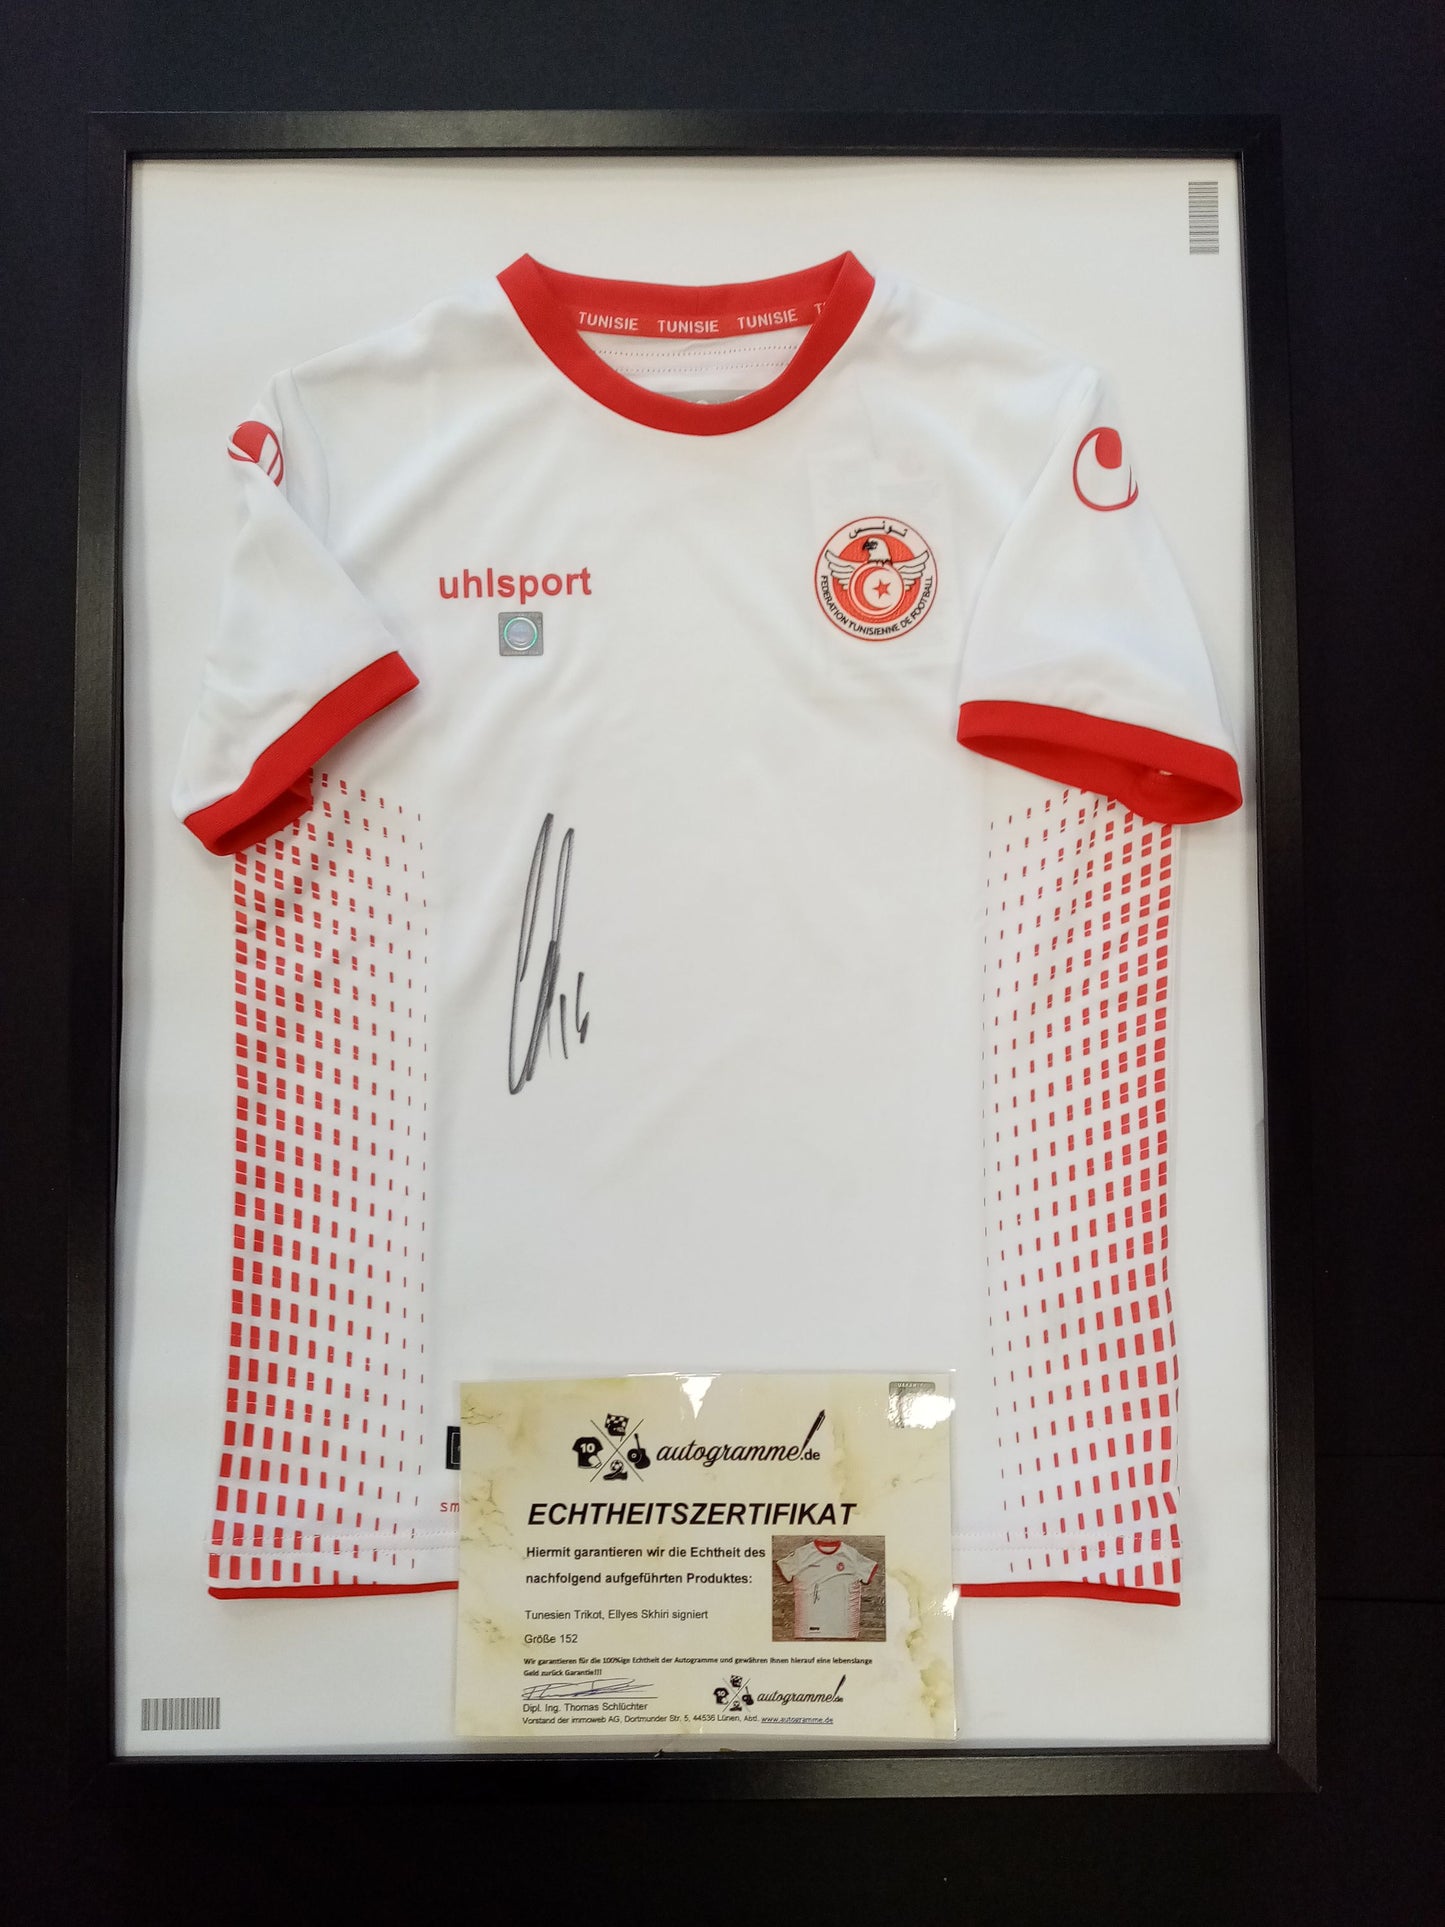 Tunesien Shirt Ellyes Skhiri signiert im Rahmen COA Uhlsport Fußball 152